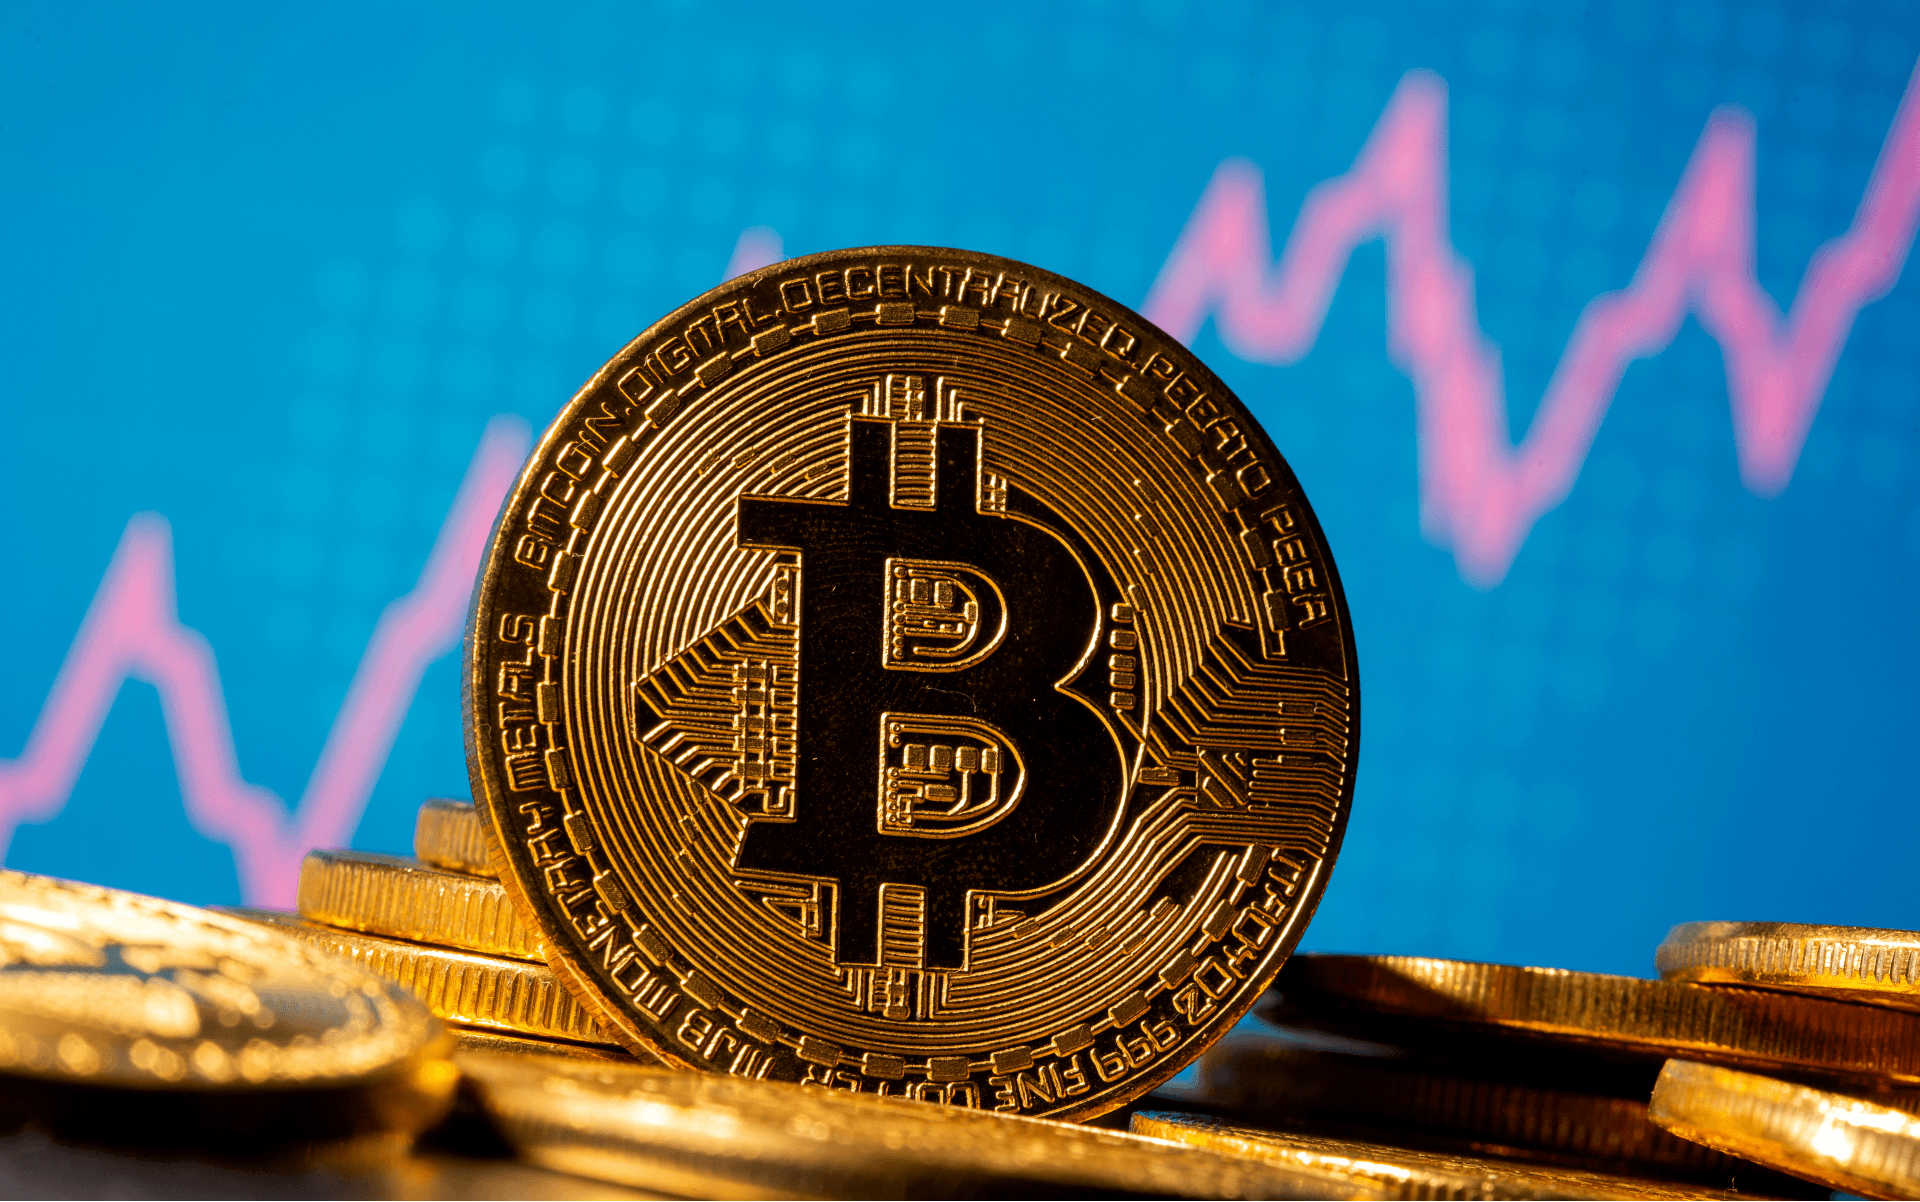 Bitcoin smashes through $50,000 as it wins more mainstream acceptance